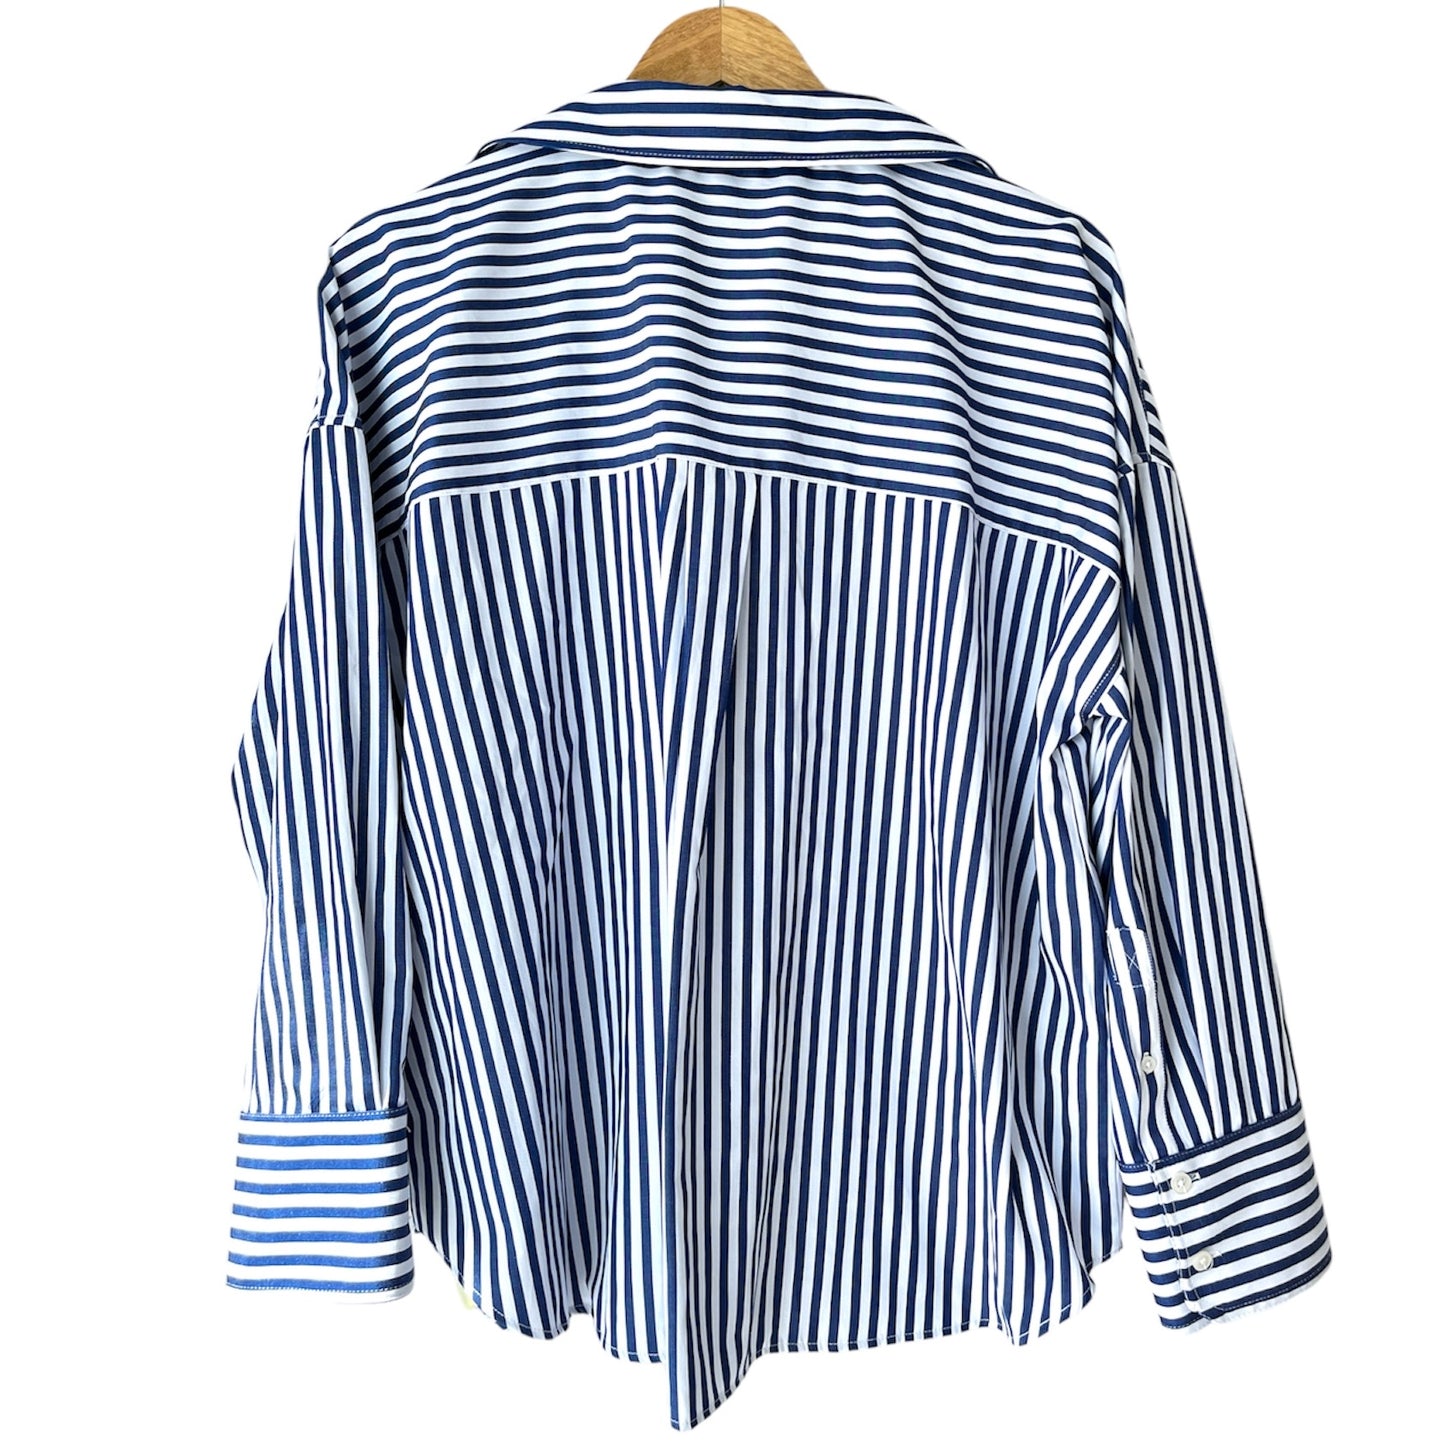 NWT Zara White & Blue Striped Poplin Shirt